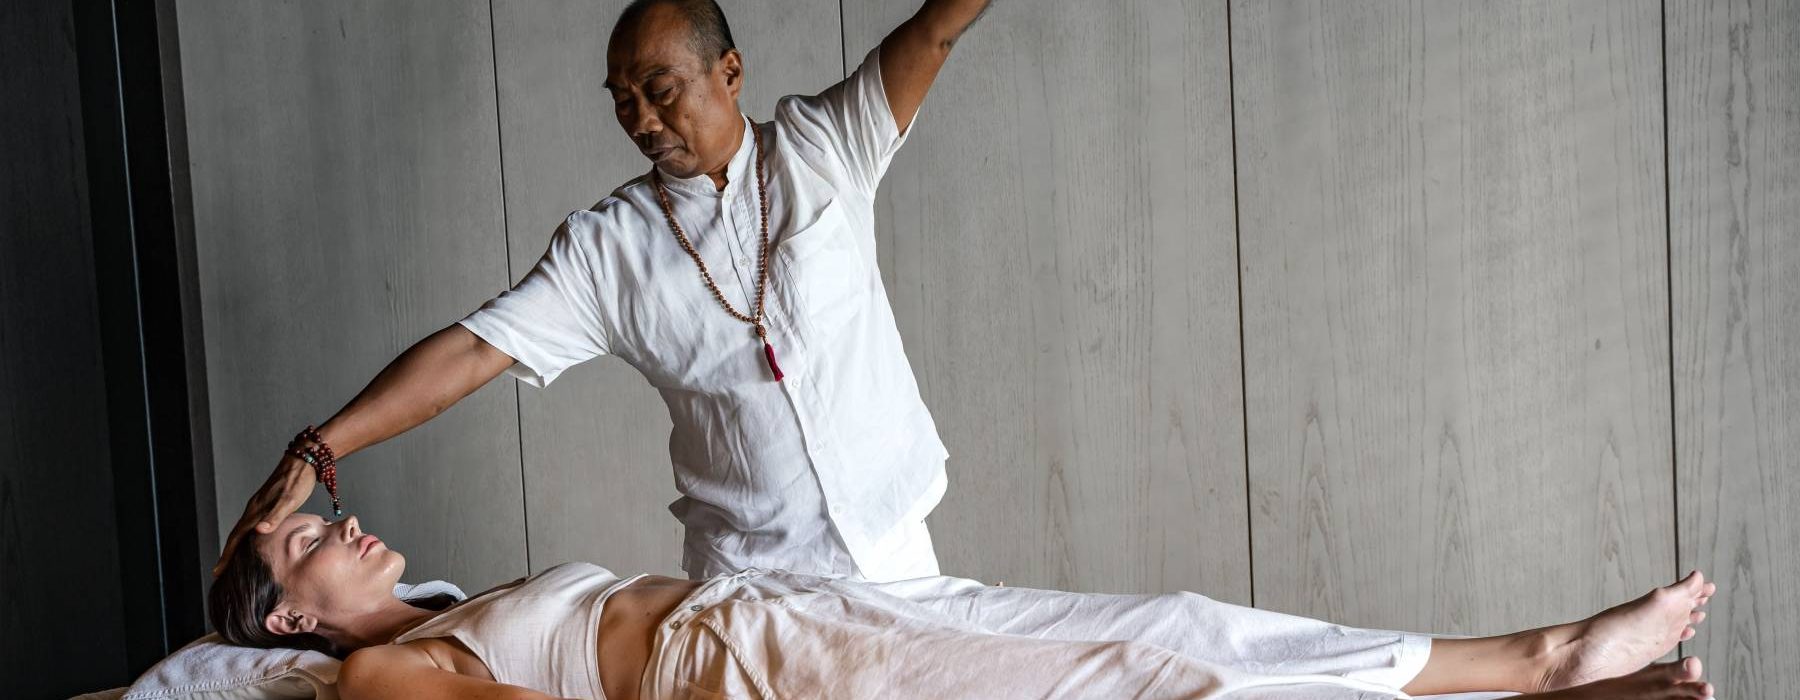 Raffles Bali - Reiki Healing: An Essential Element of the Five Senses of Wellness